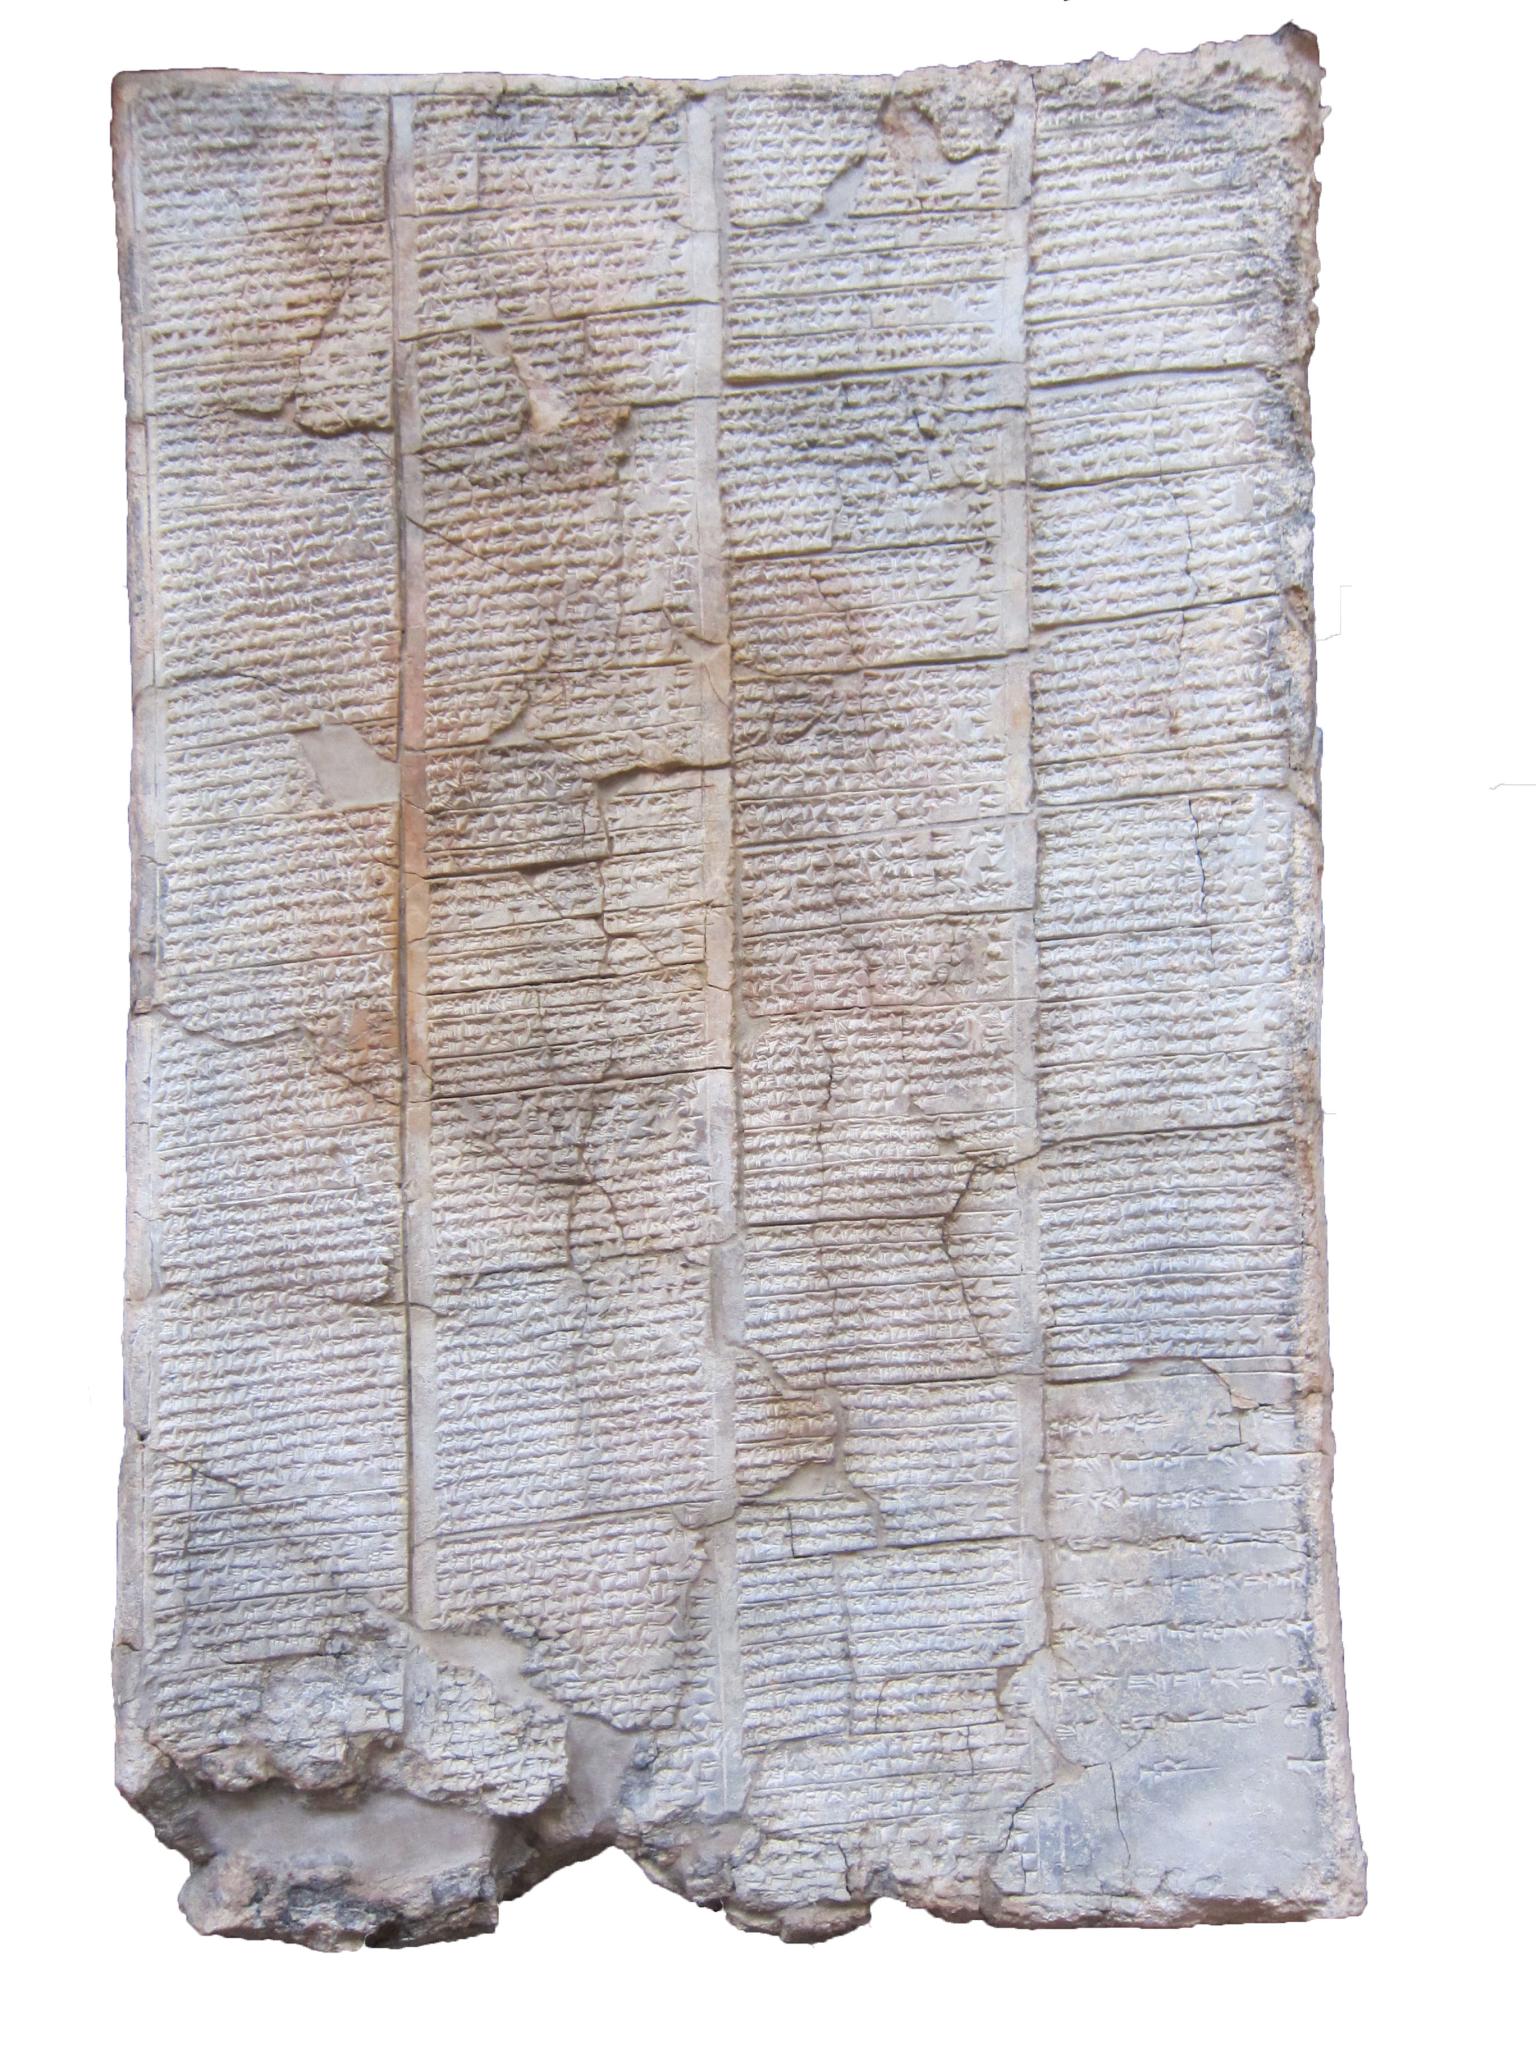 Clay tablet with cuneiform inscription.